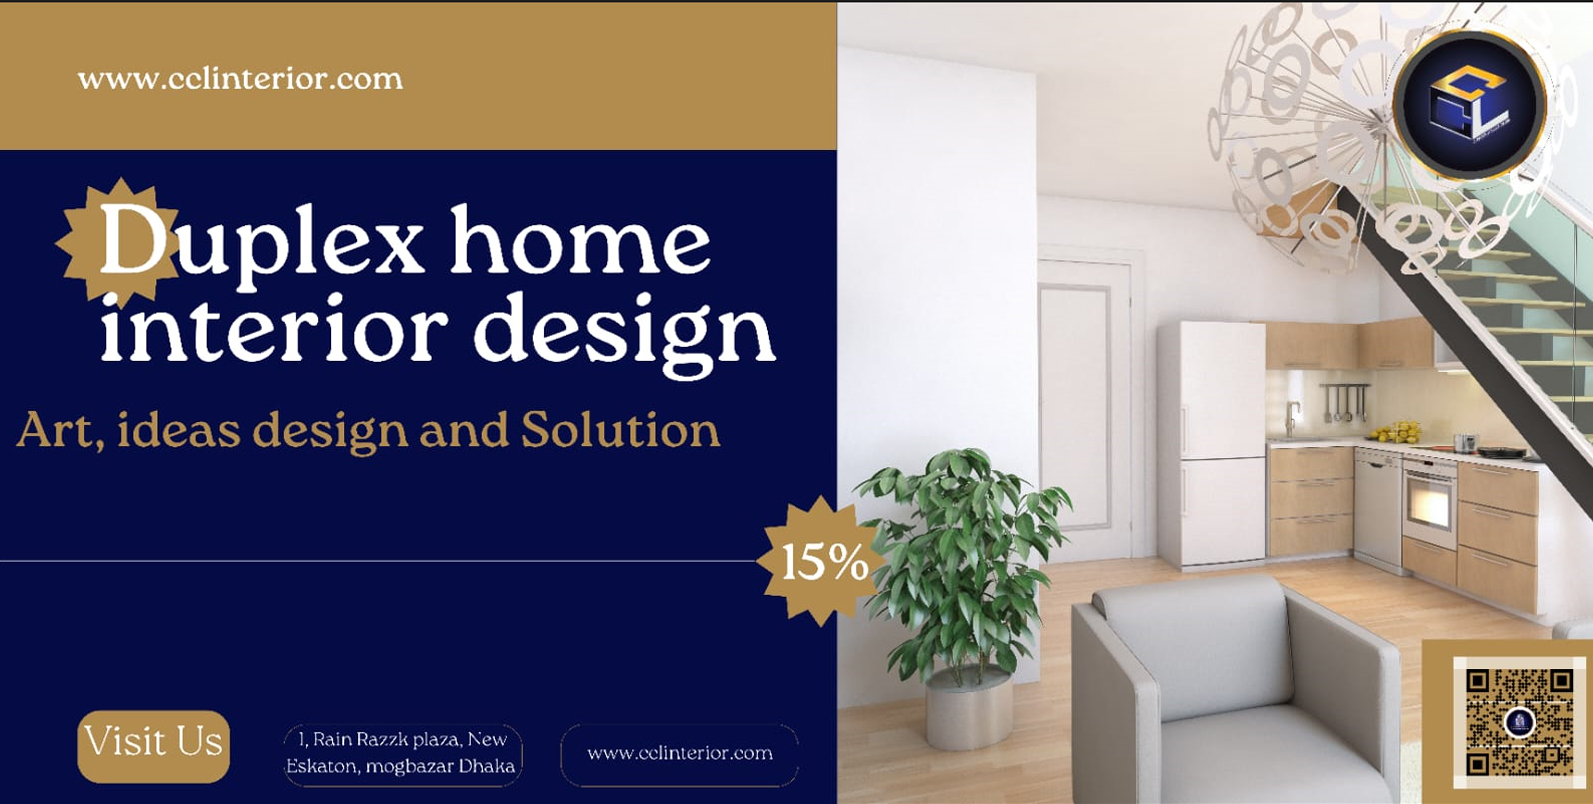 Duplex home interior design